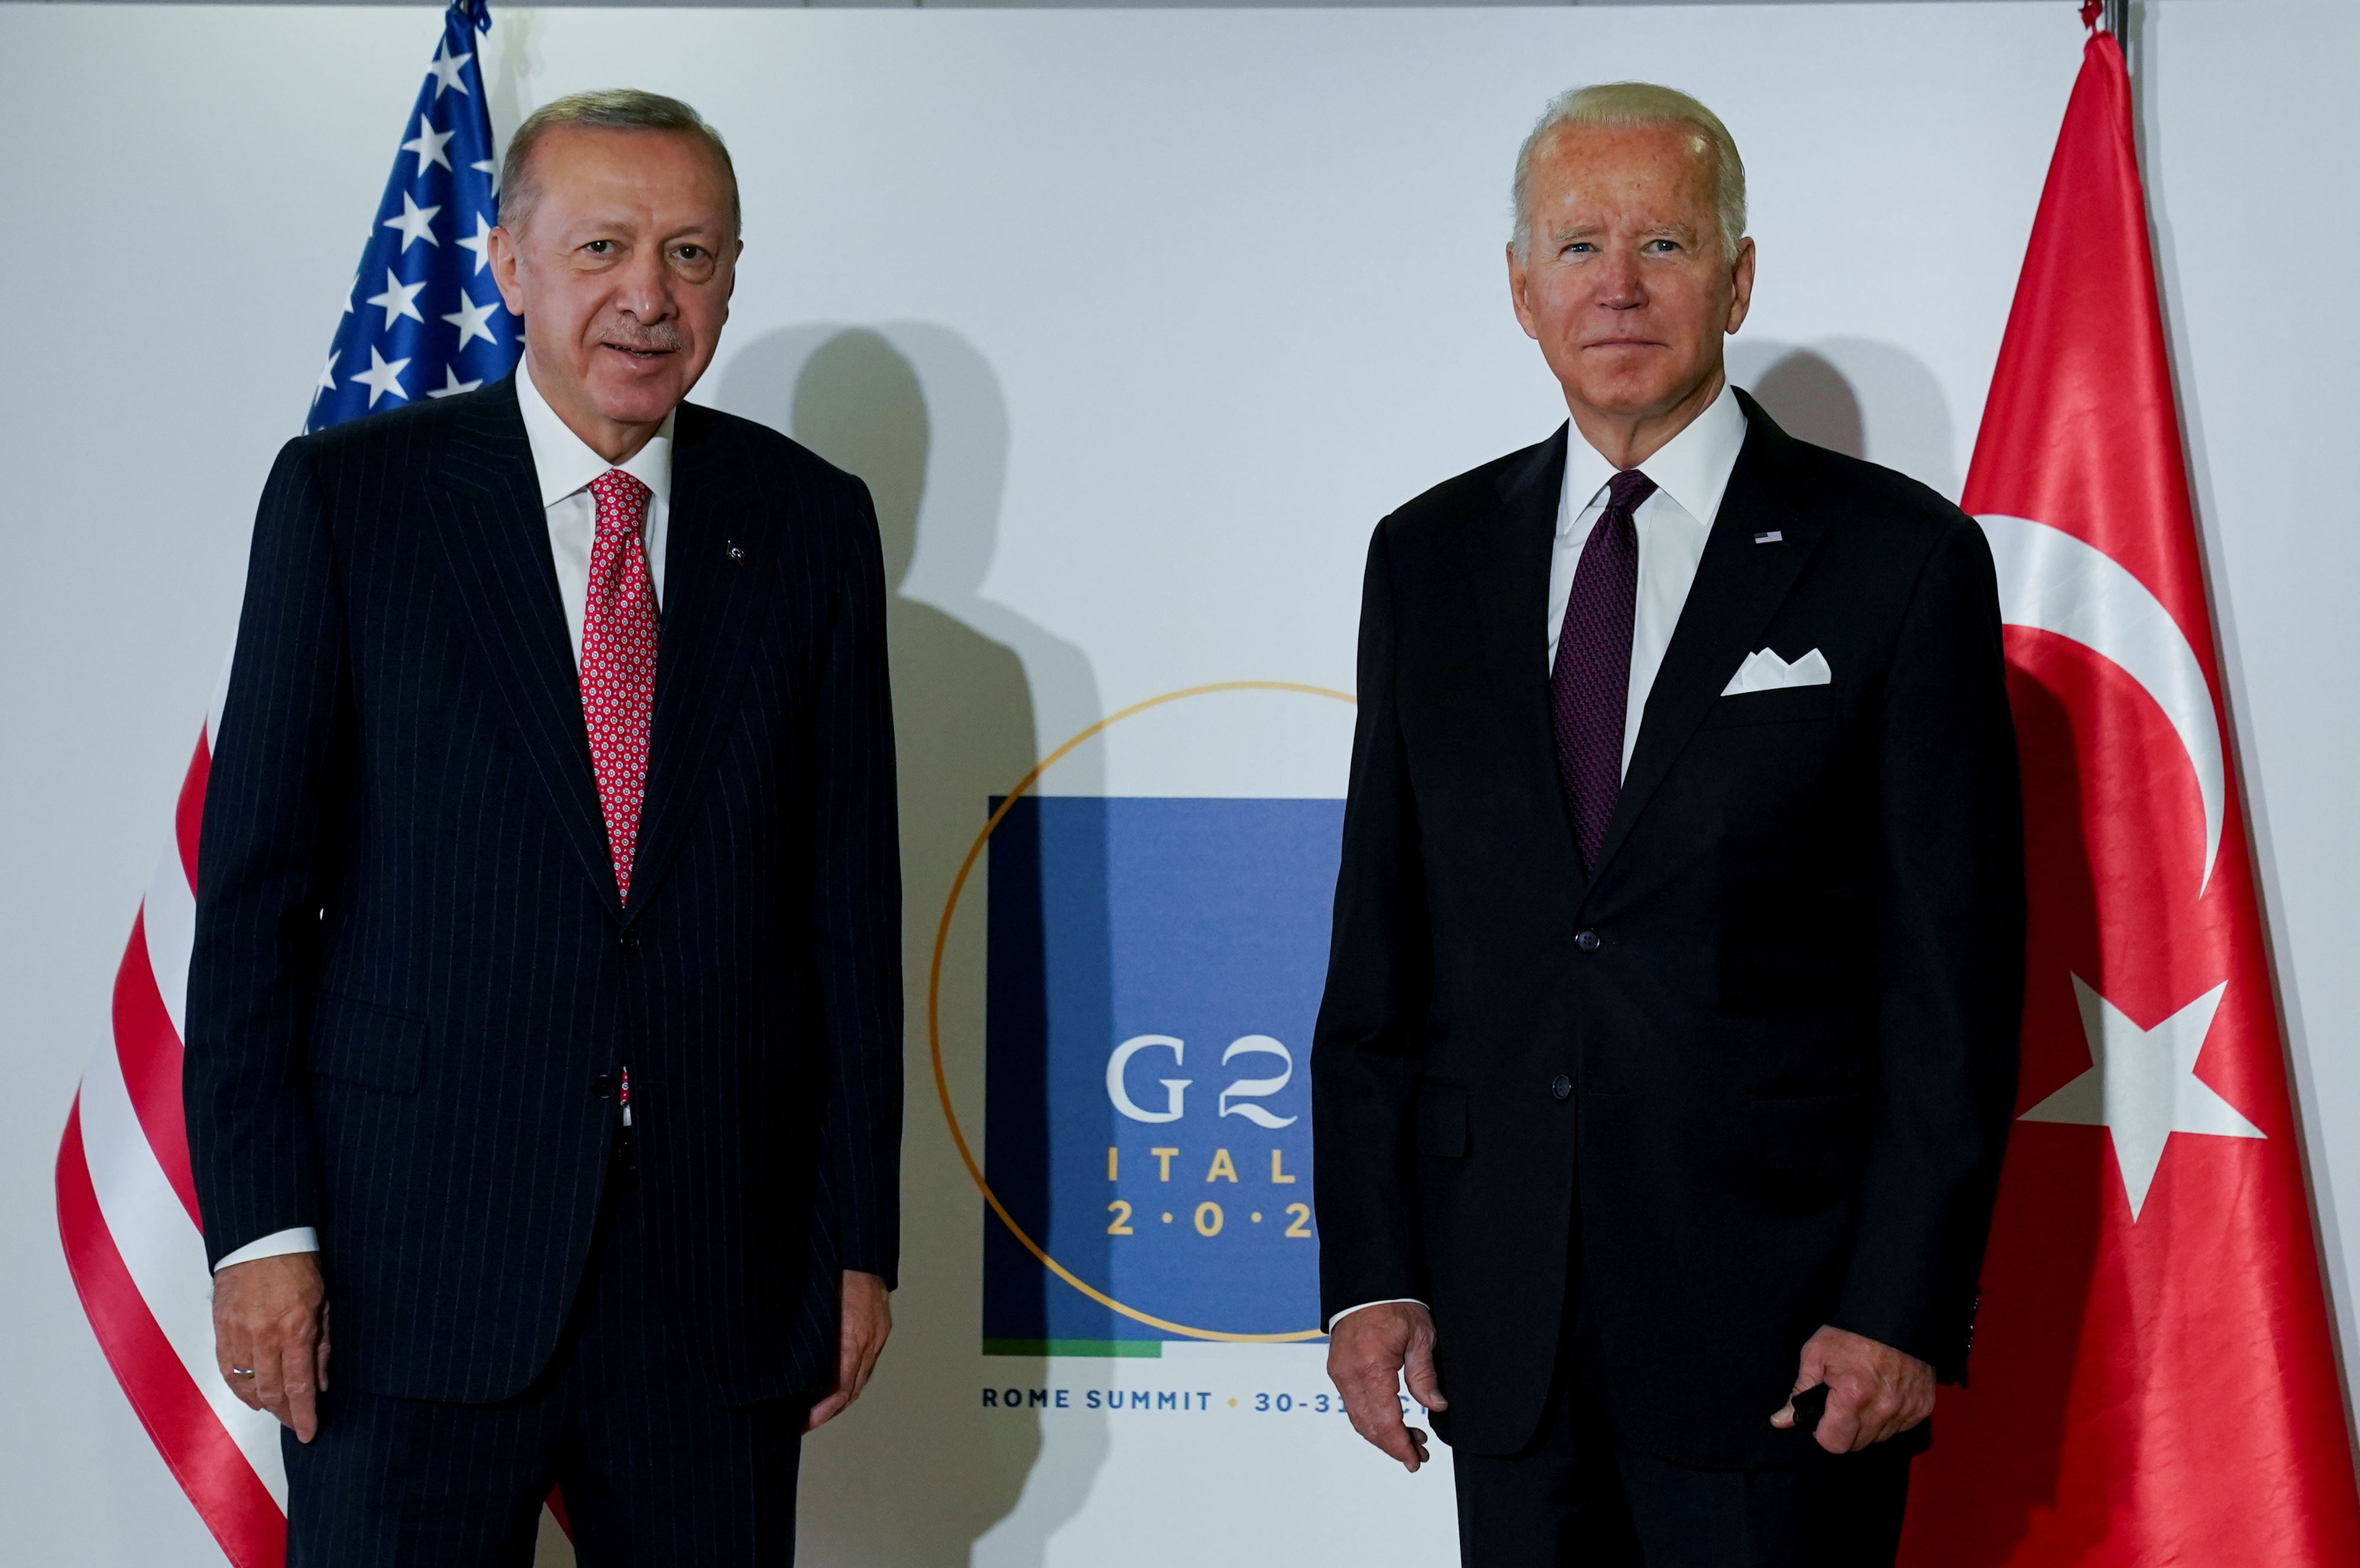 بايدن وأردوغان يبحثان ملفي "F-16" وانضمام السويد "للناتو"
